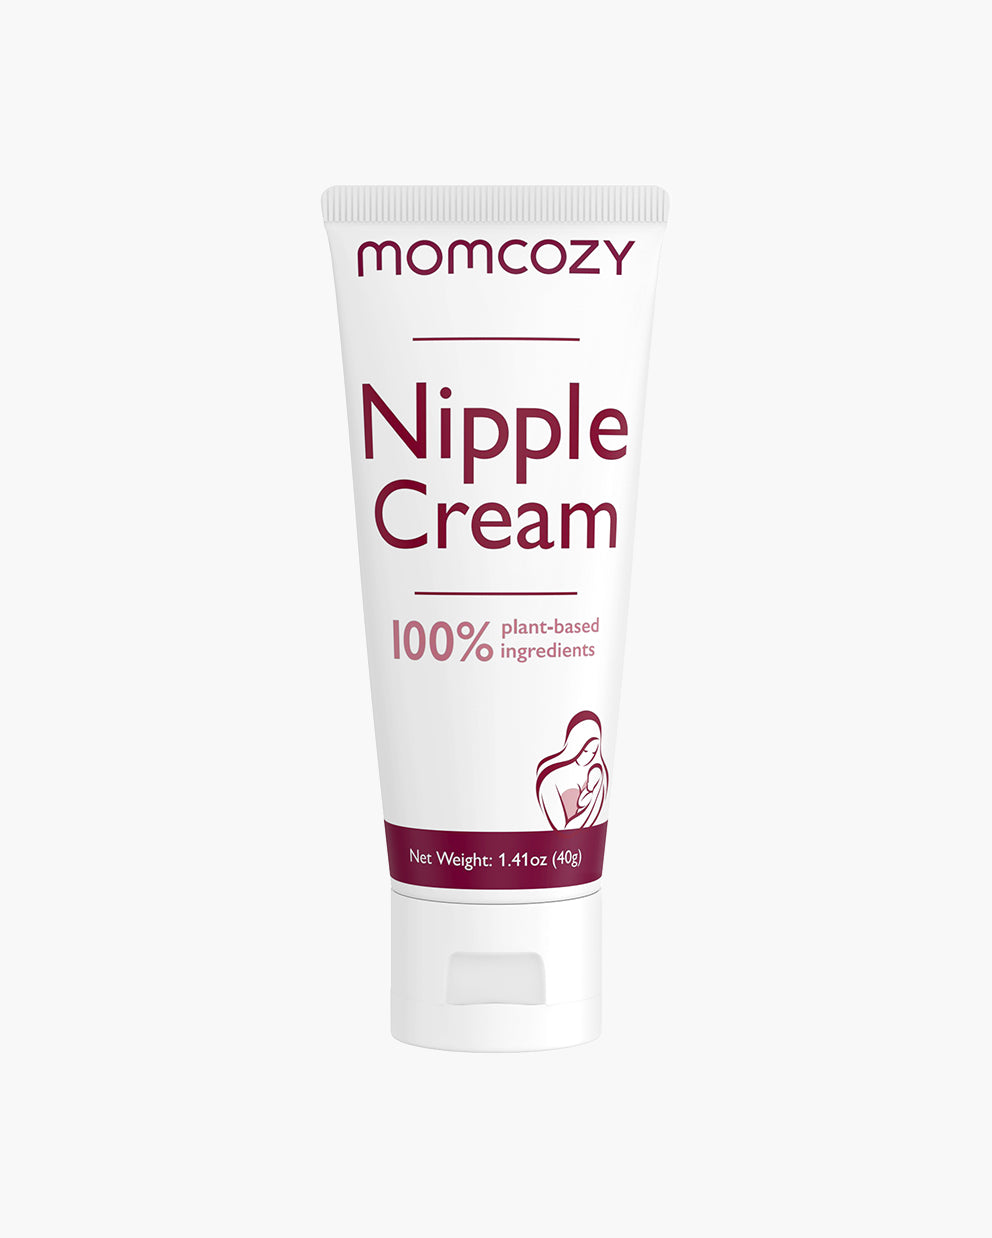 The best nipple creams for breastfeeding 2023